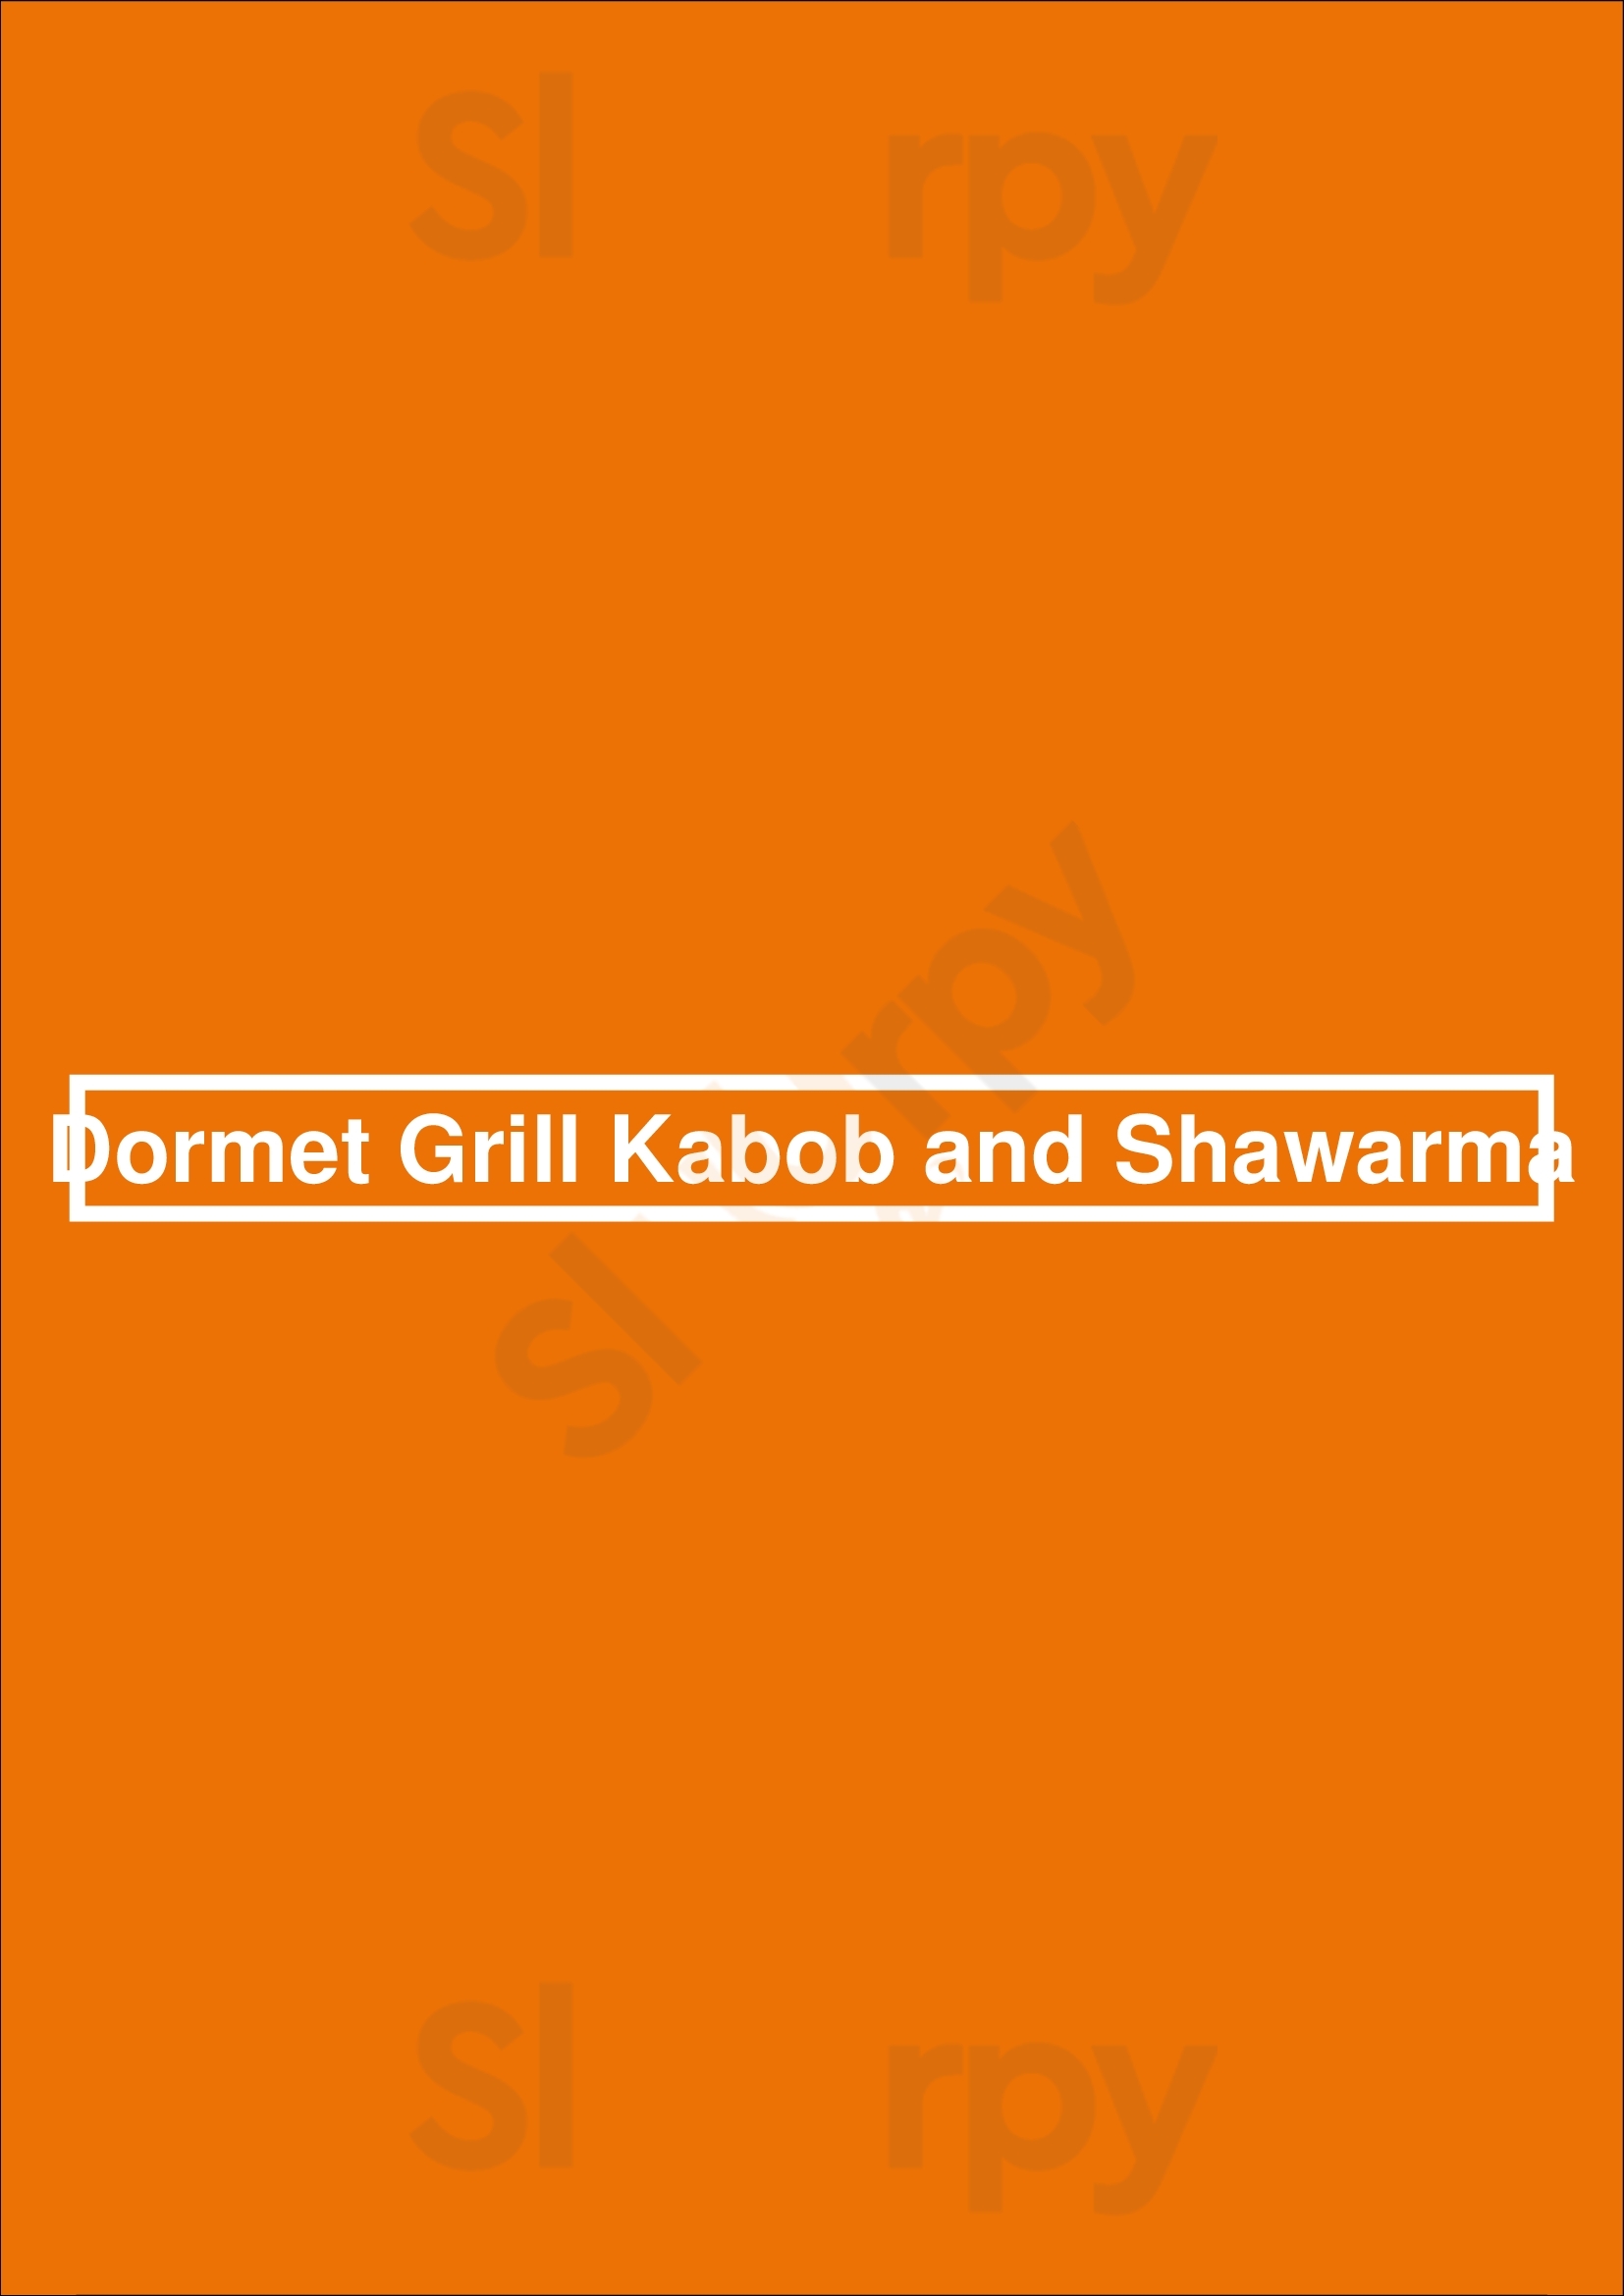 Dormet Grill Kabob And Shawarma Toronto Menu - 1